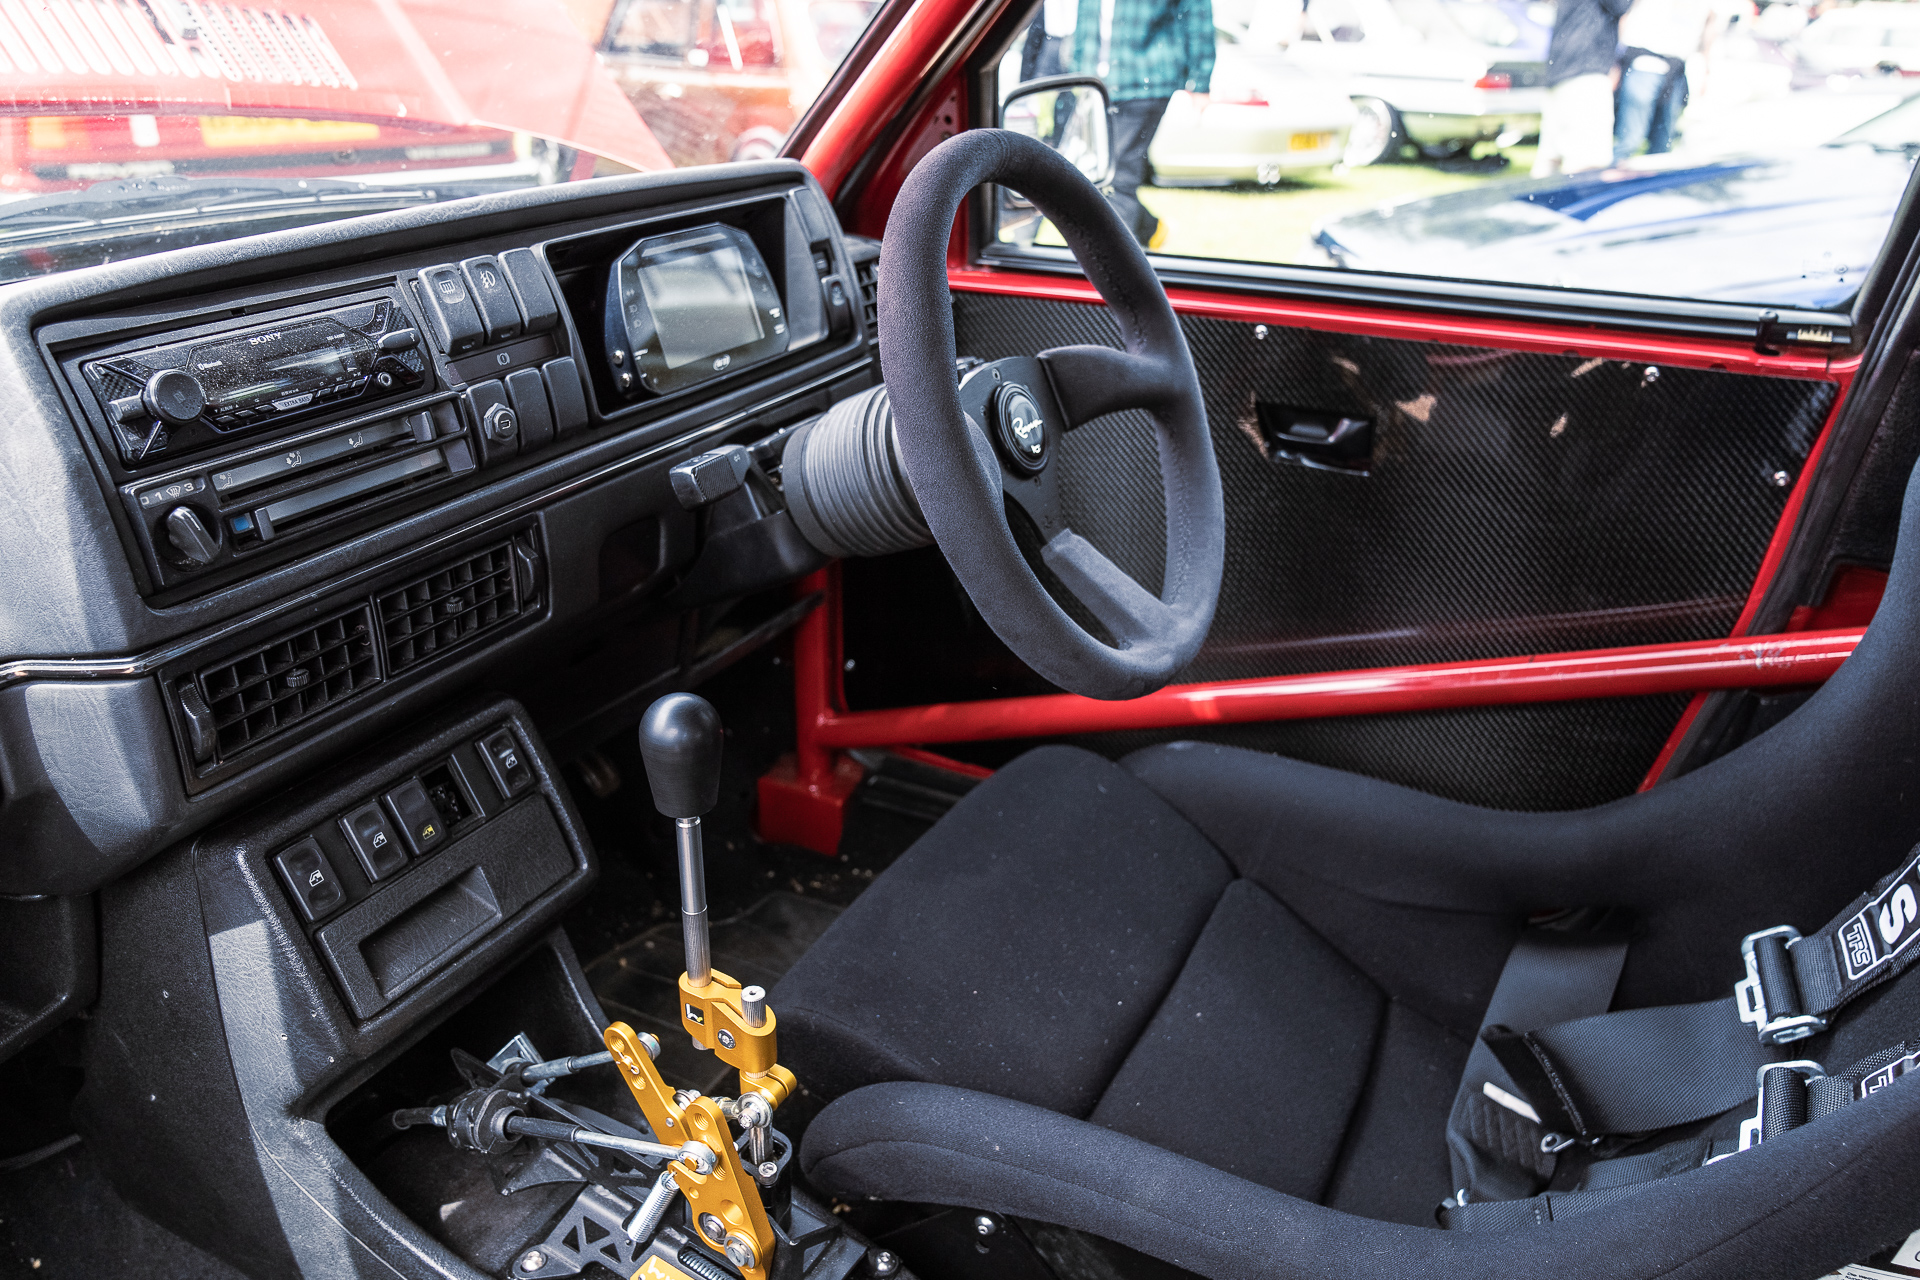 VW MK2 Jetta interior at Players Classic 2022